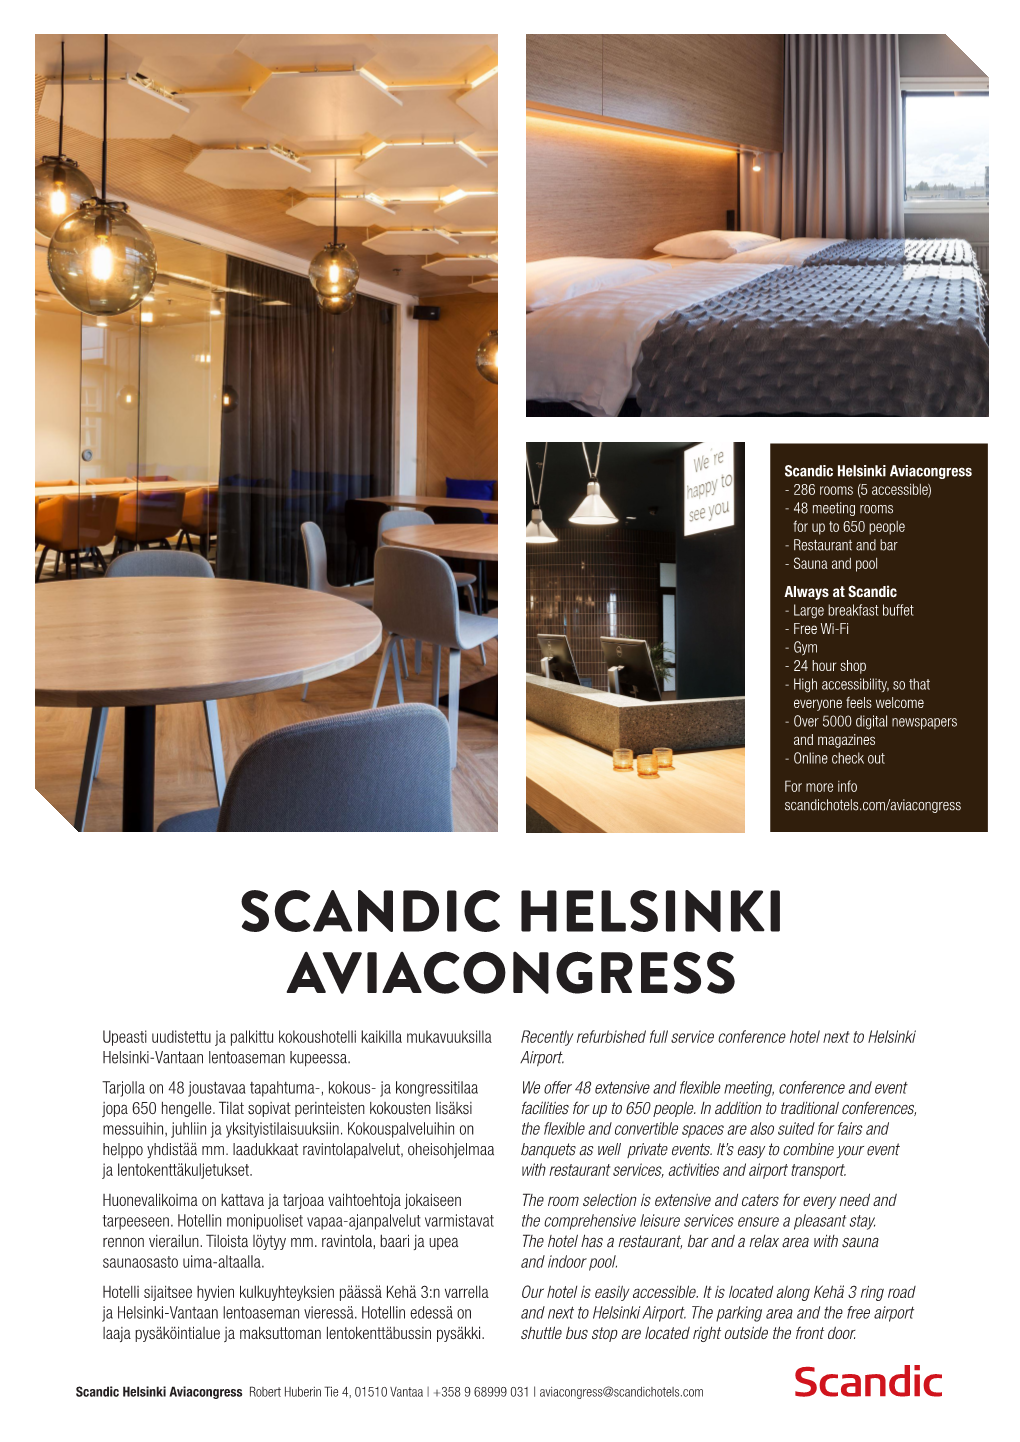 Scandic Helsinki Aviacongress